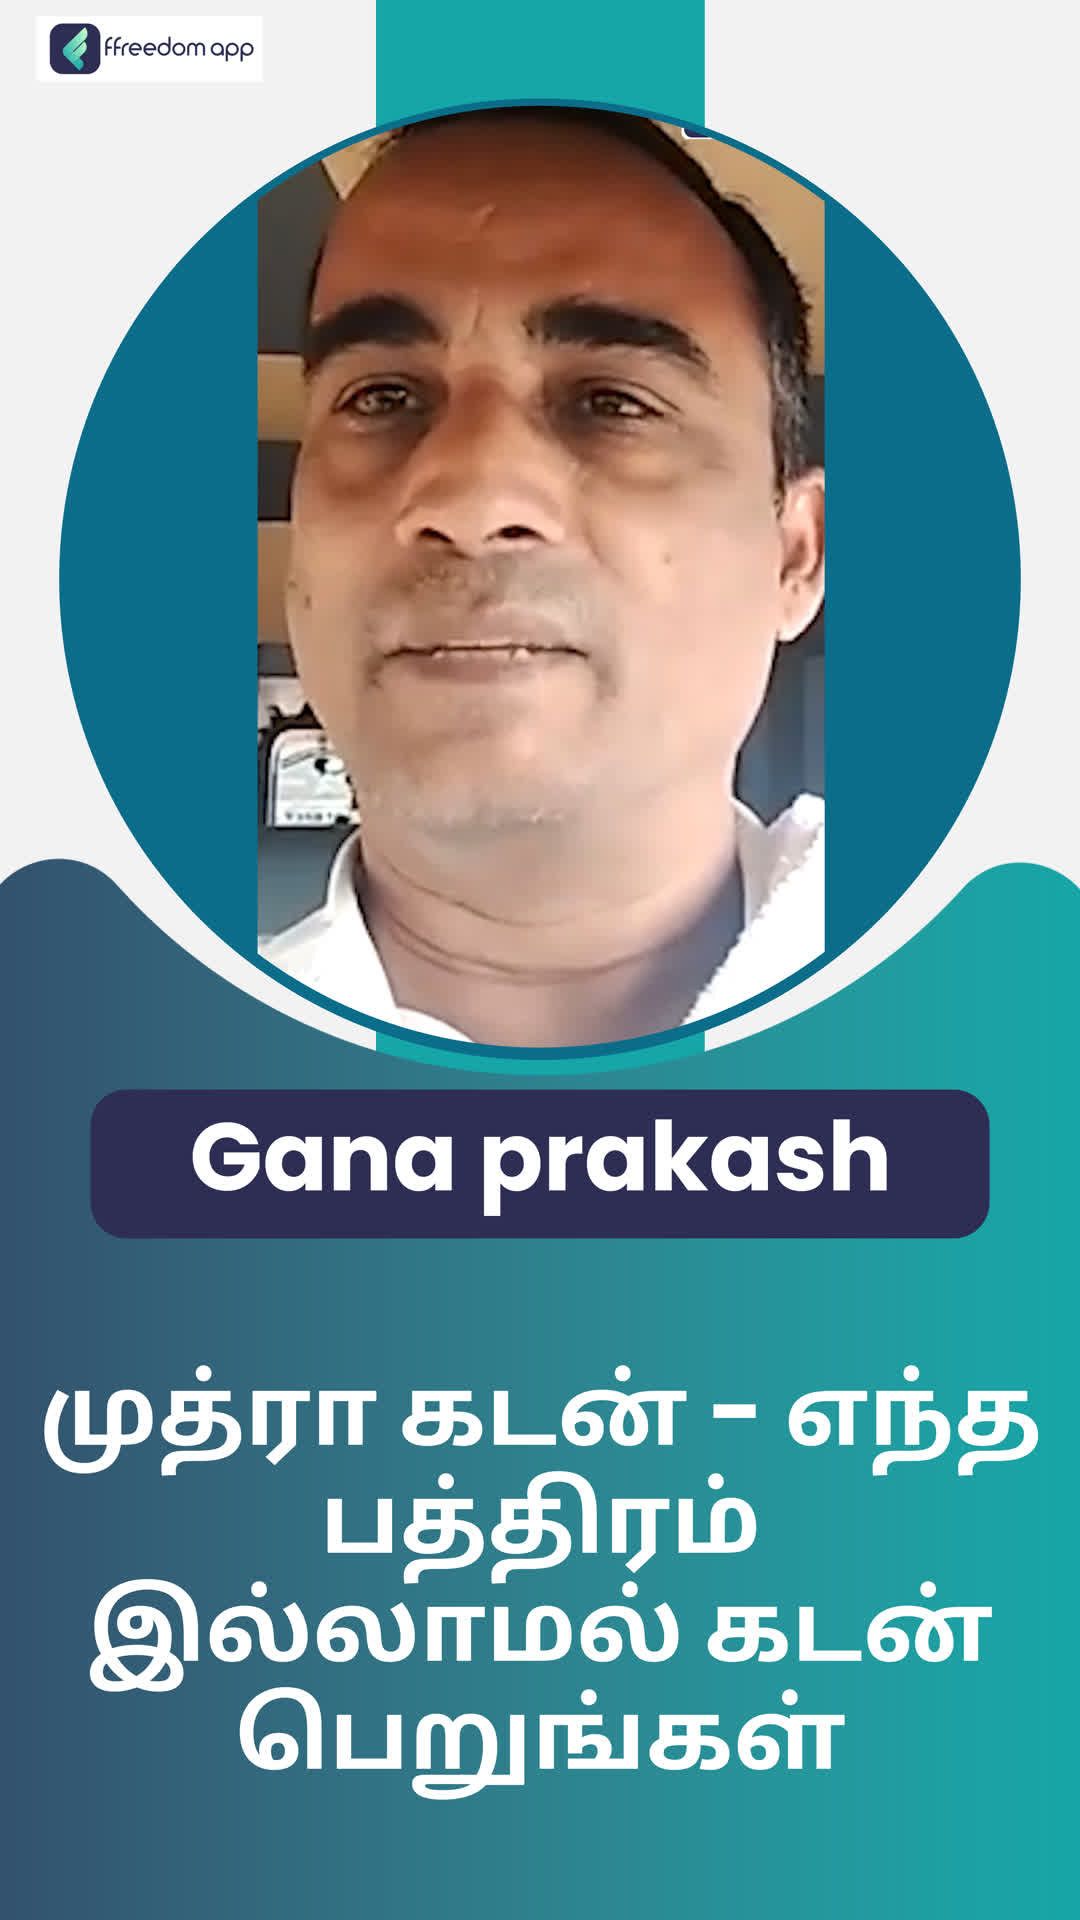 Gnanaprakash's Honest Review of ffreedom app - Chennai ,Tamil Nadu